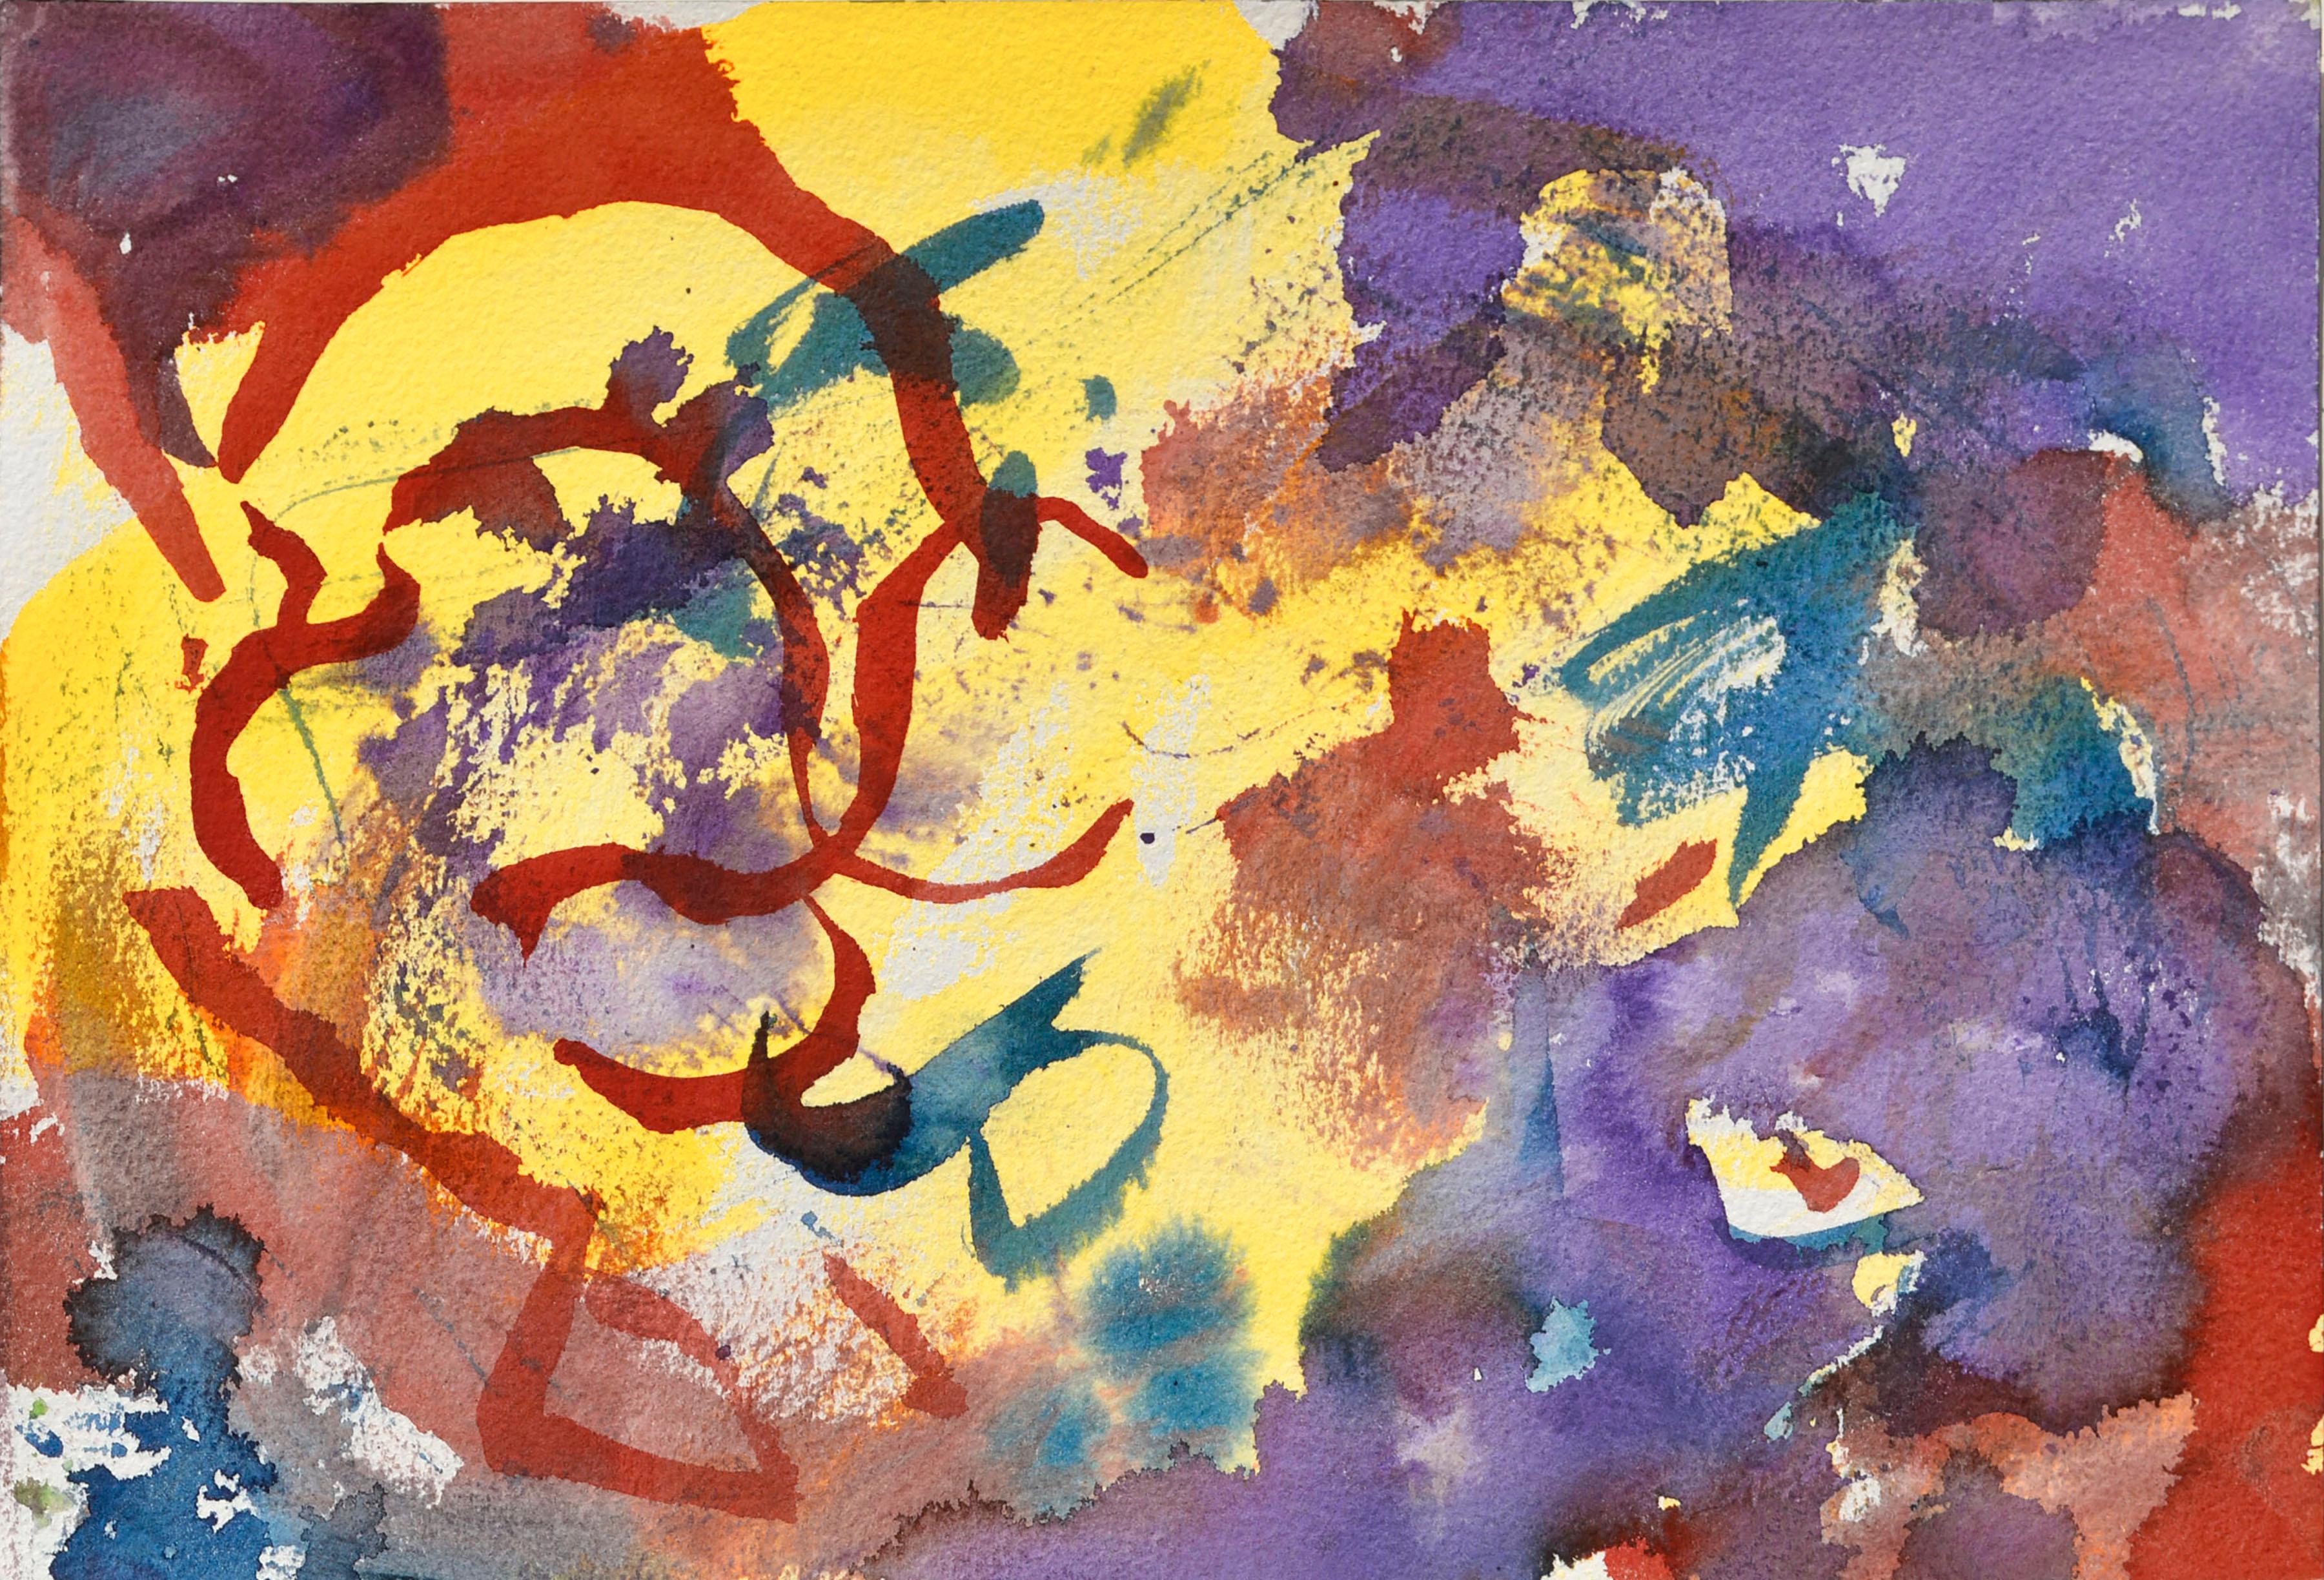 Abstract Drawing Les Anderson - Abstraite jaune, violette et rouge 